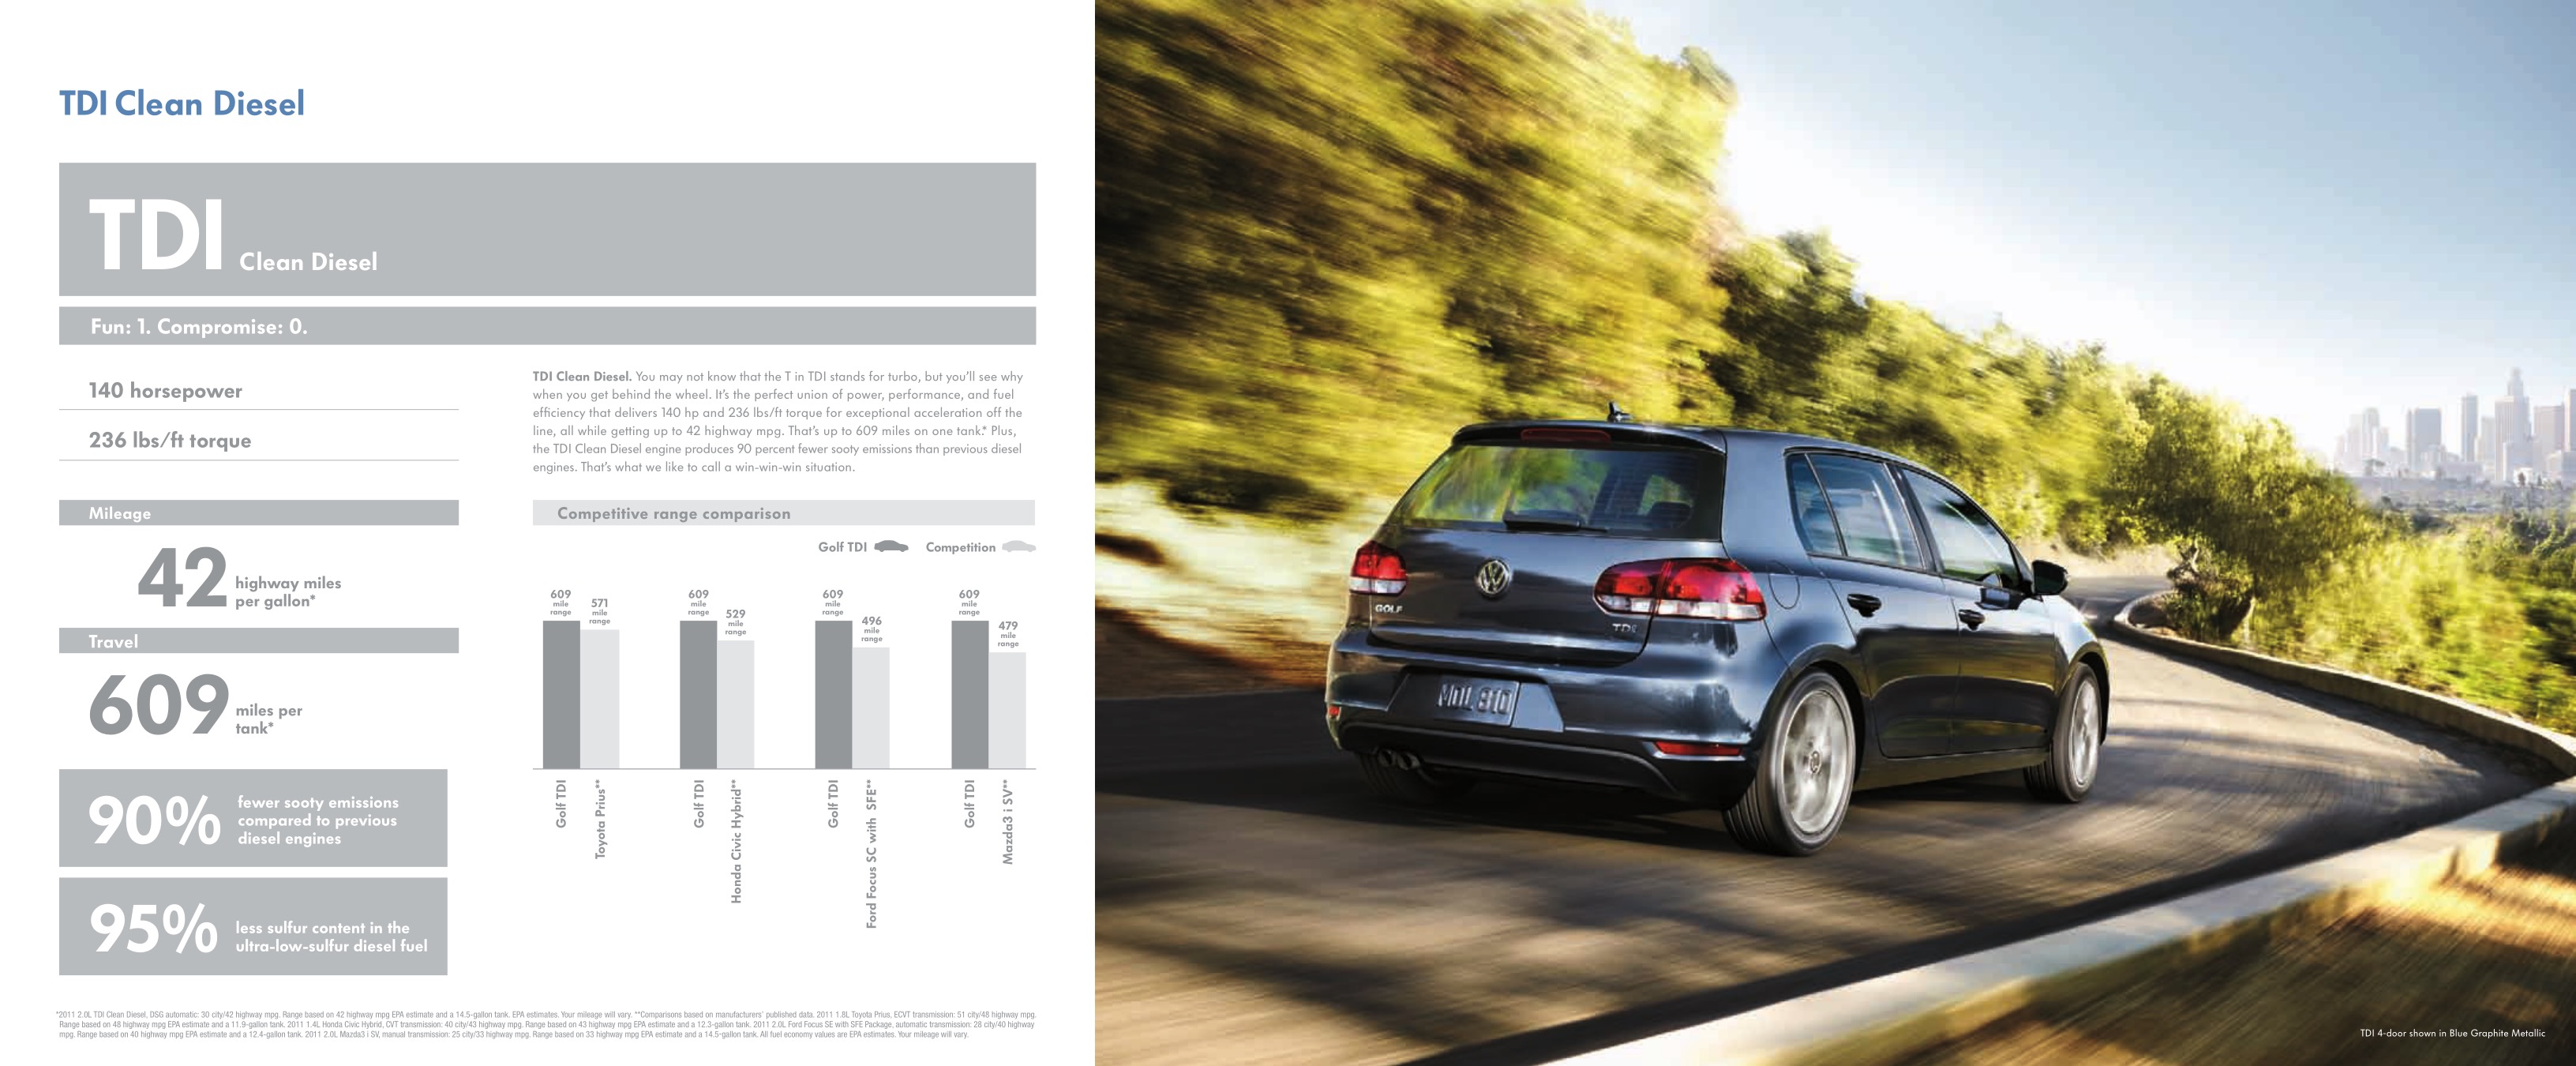 2012 VW Golf Brochure Page 2